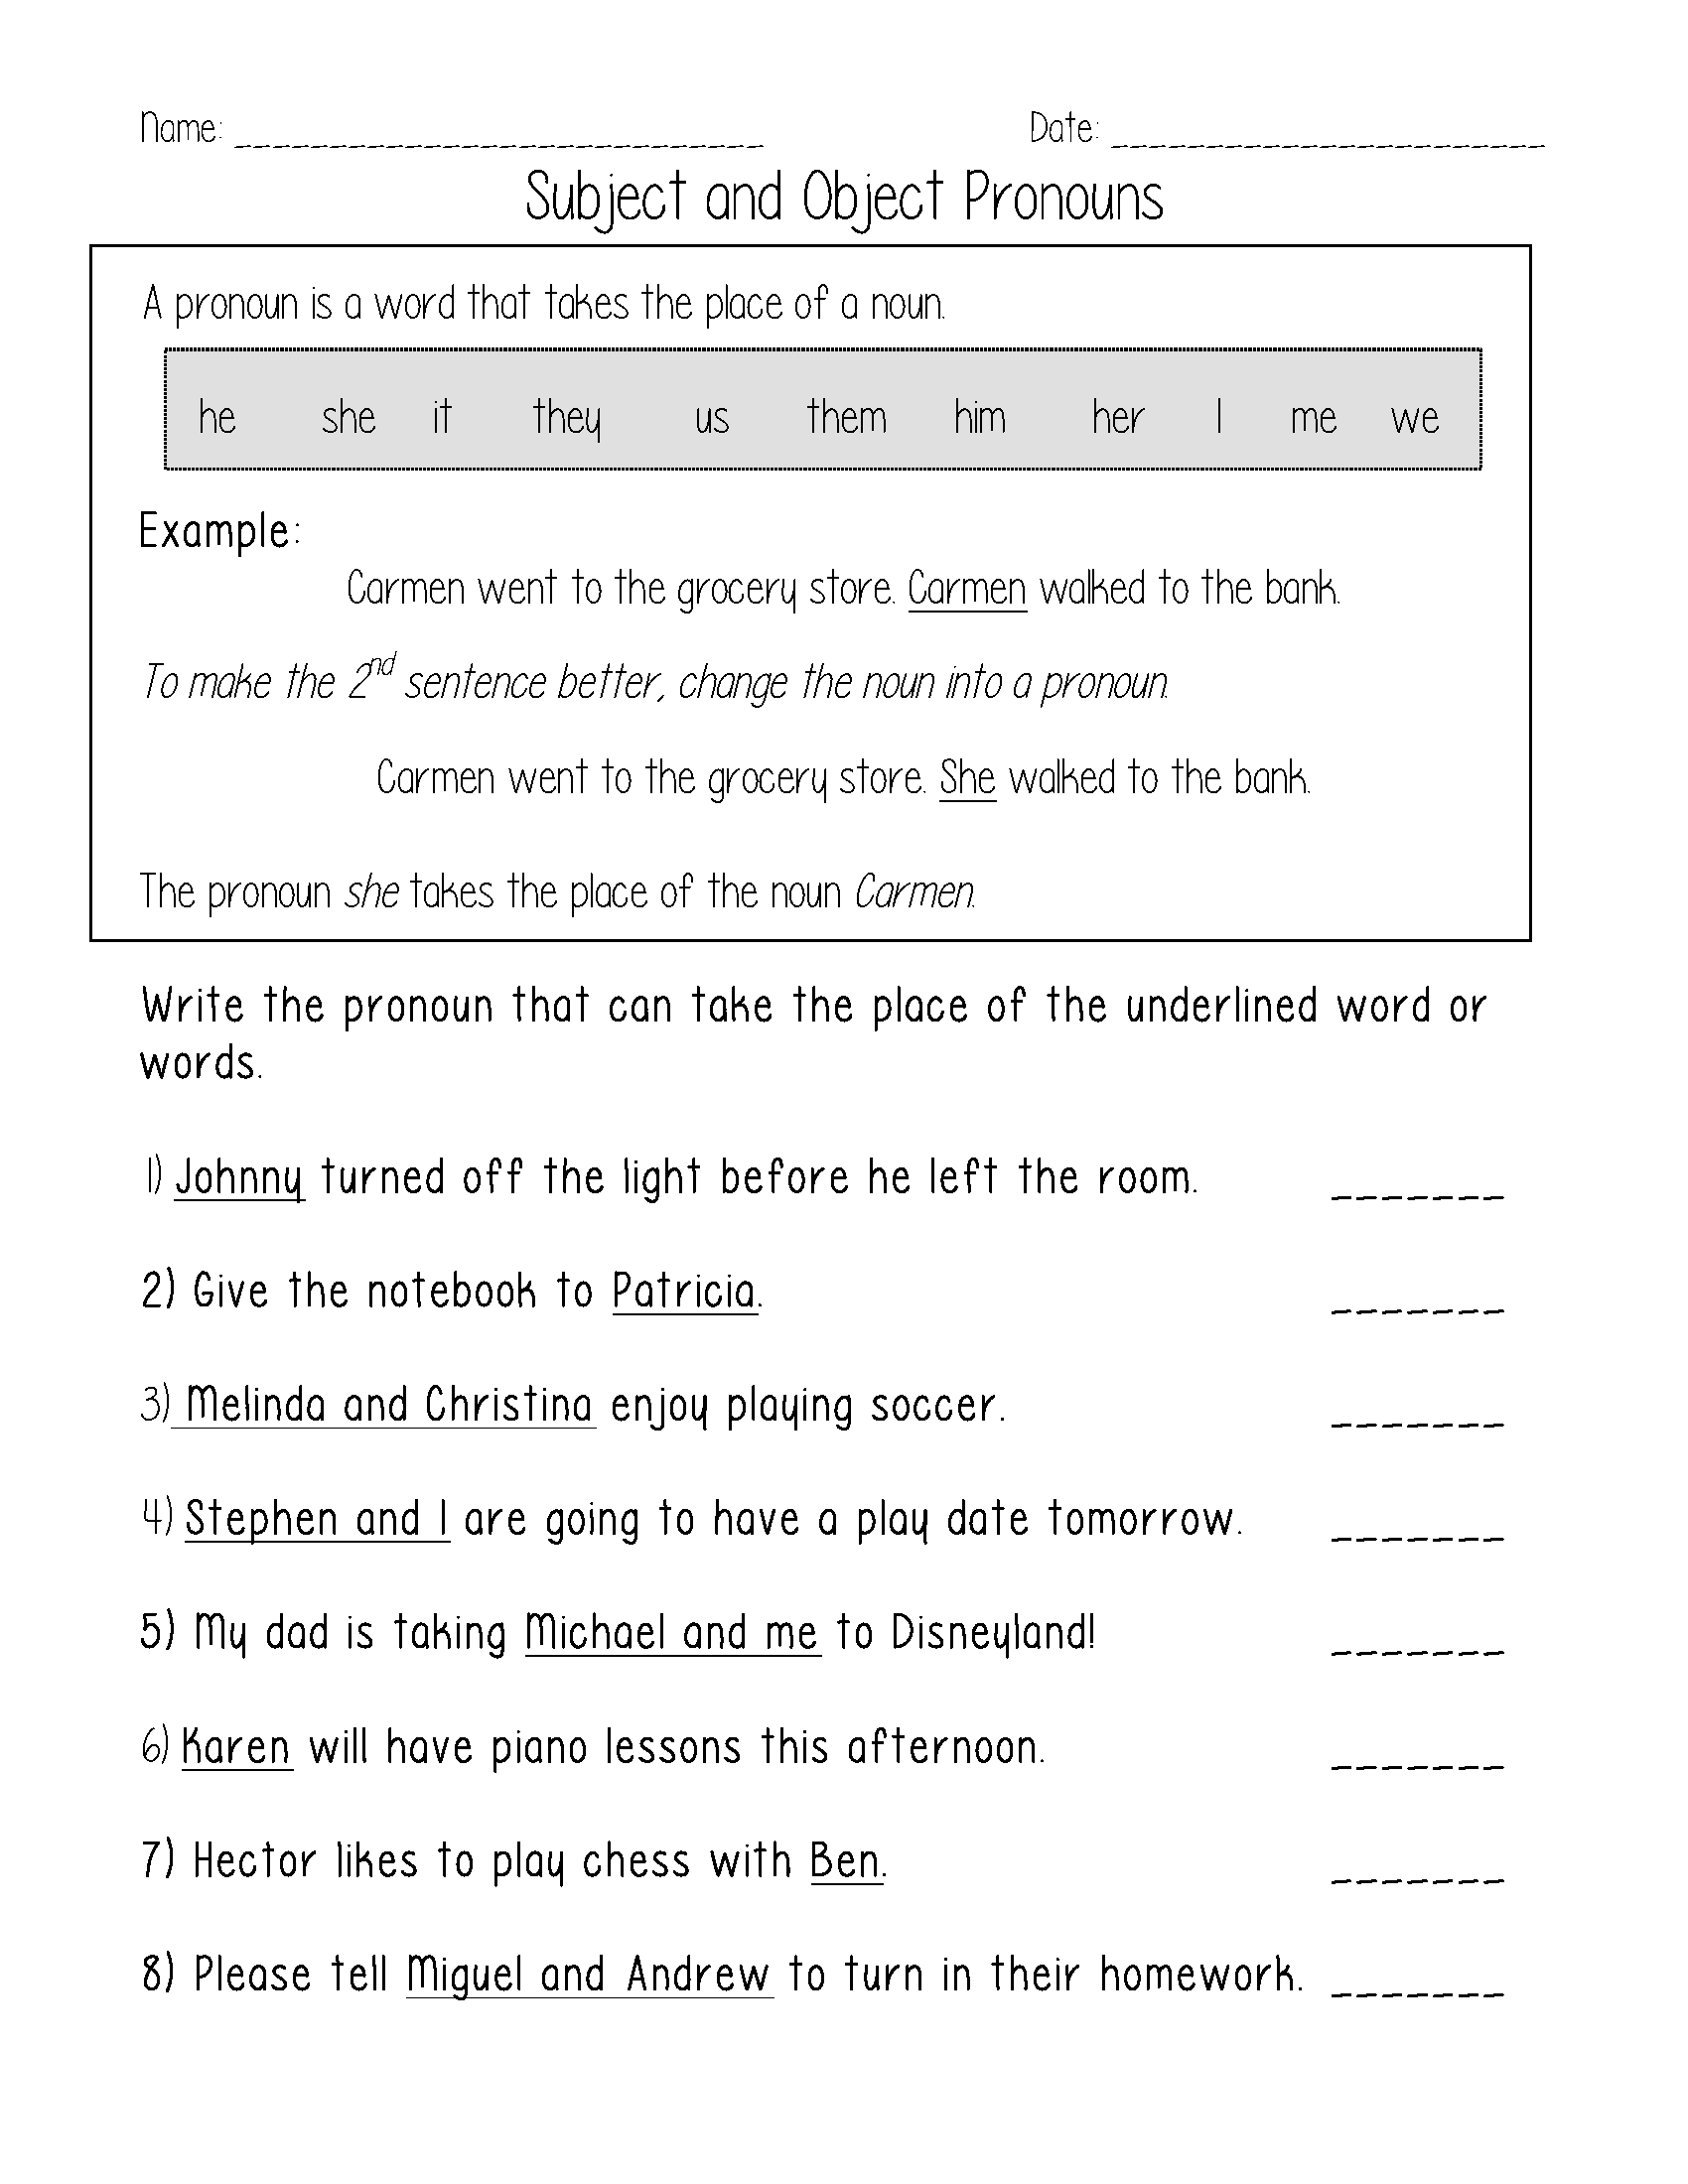 demonstrative-pronouns-interactive-worksheet-for-grade-7